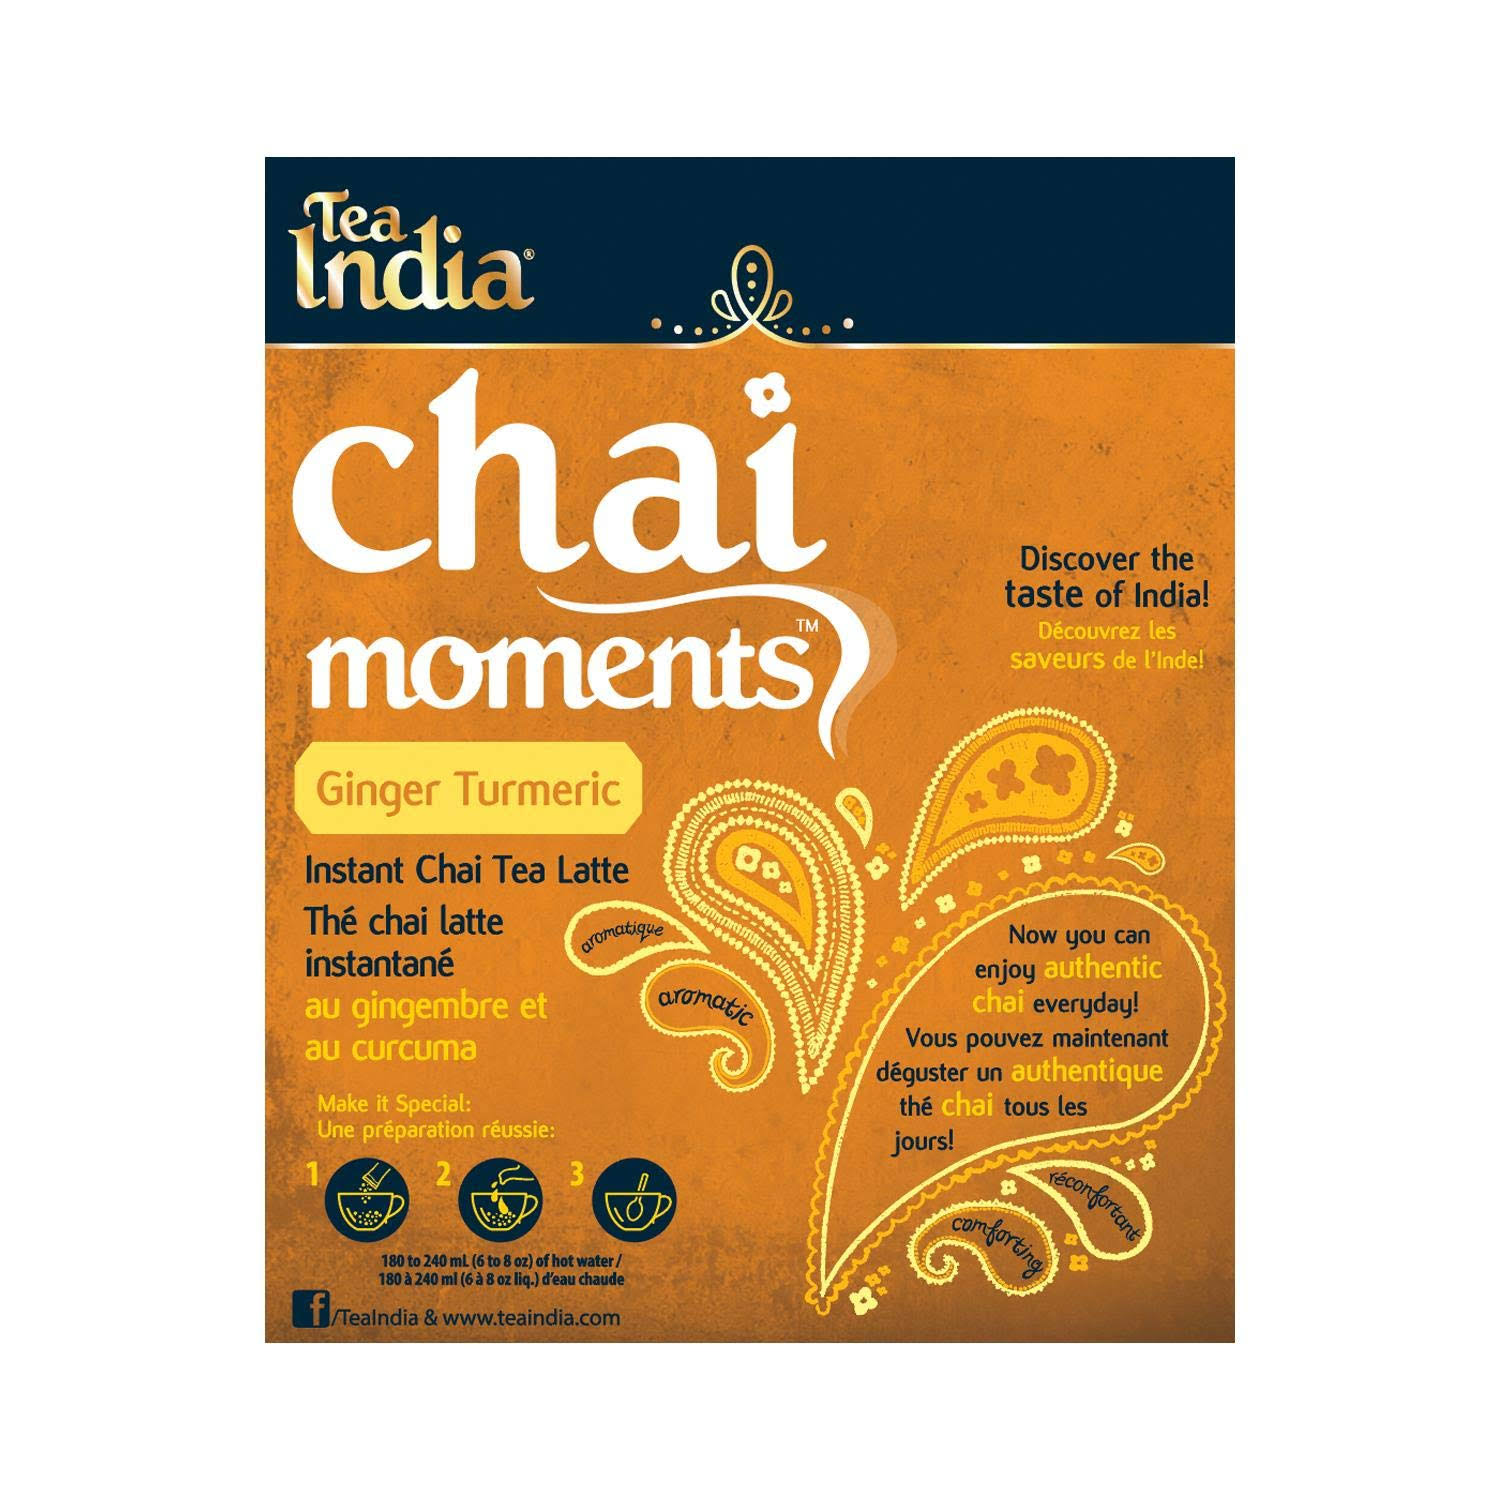 Tea India Chai Moments Instant Chai Latte Ginger Turmeric 10 Sachets (